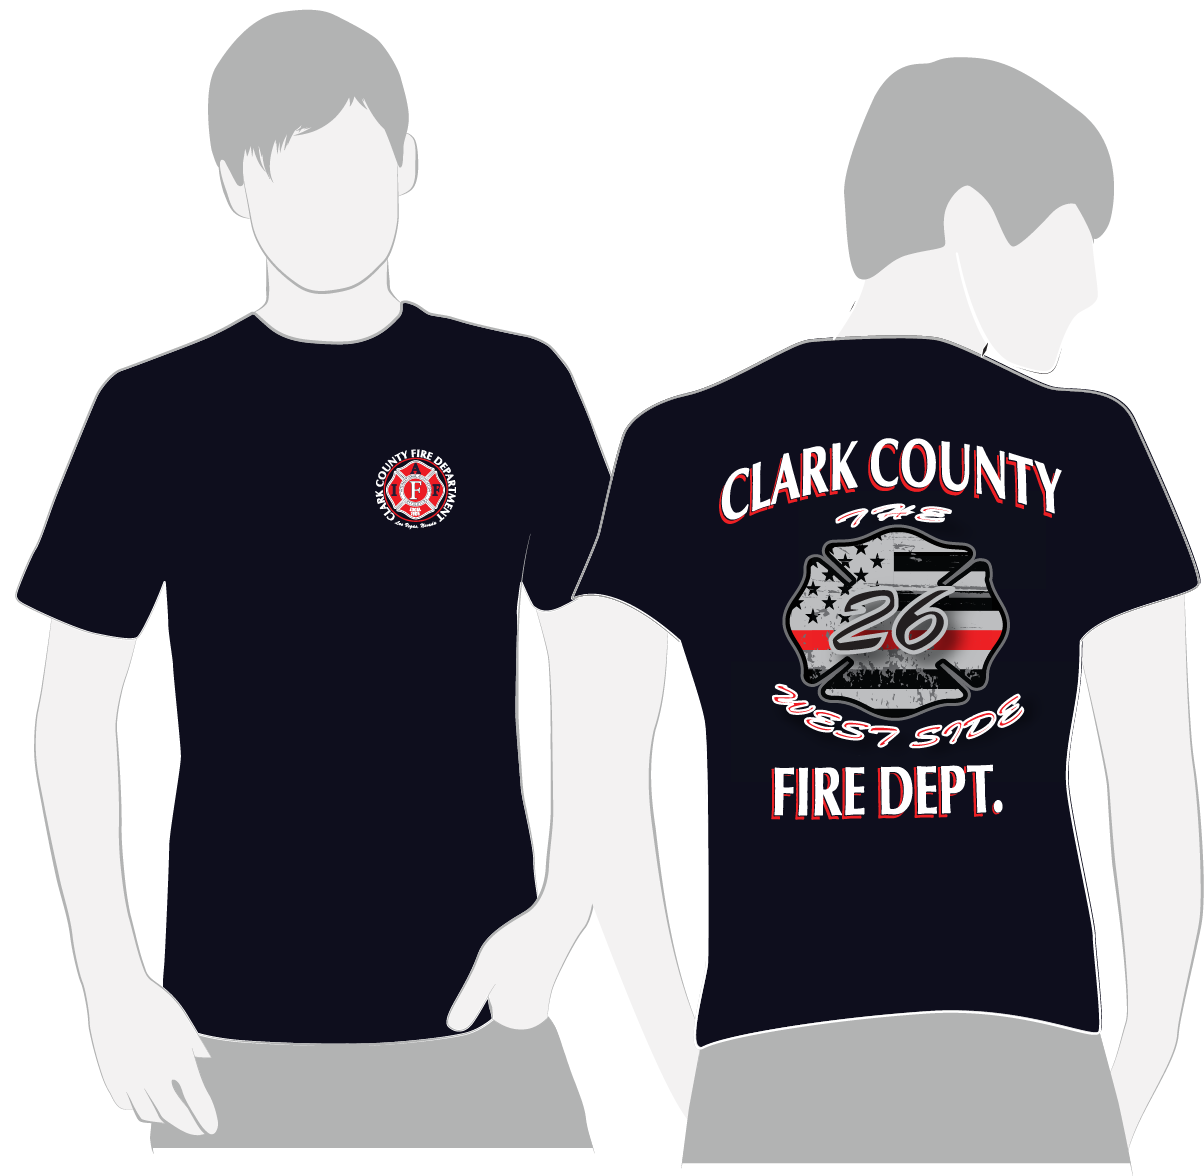 CCFD Station 26 Duty Shirts